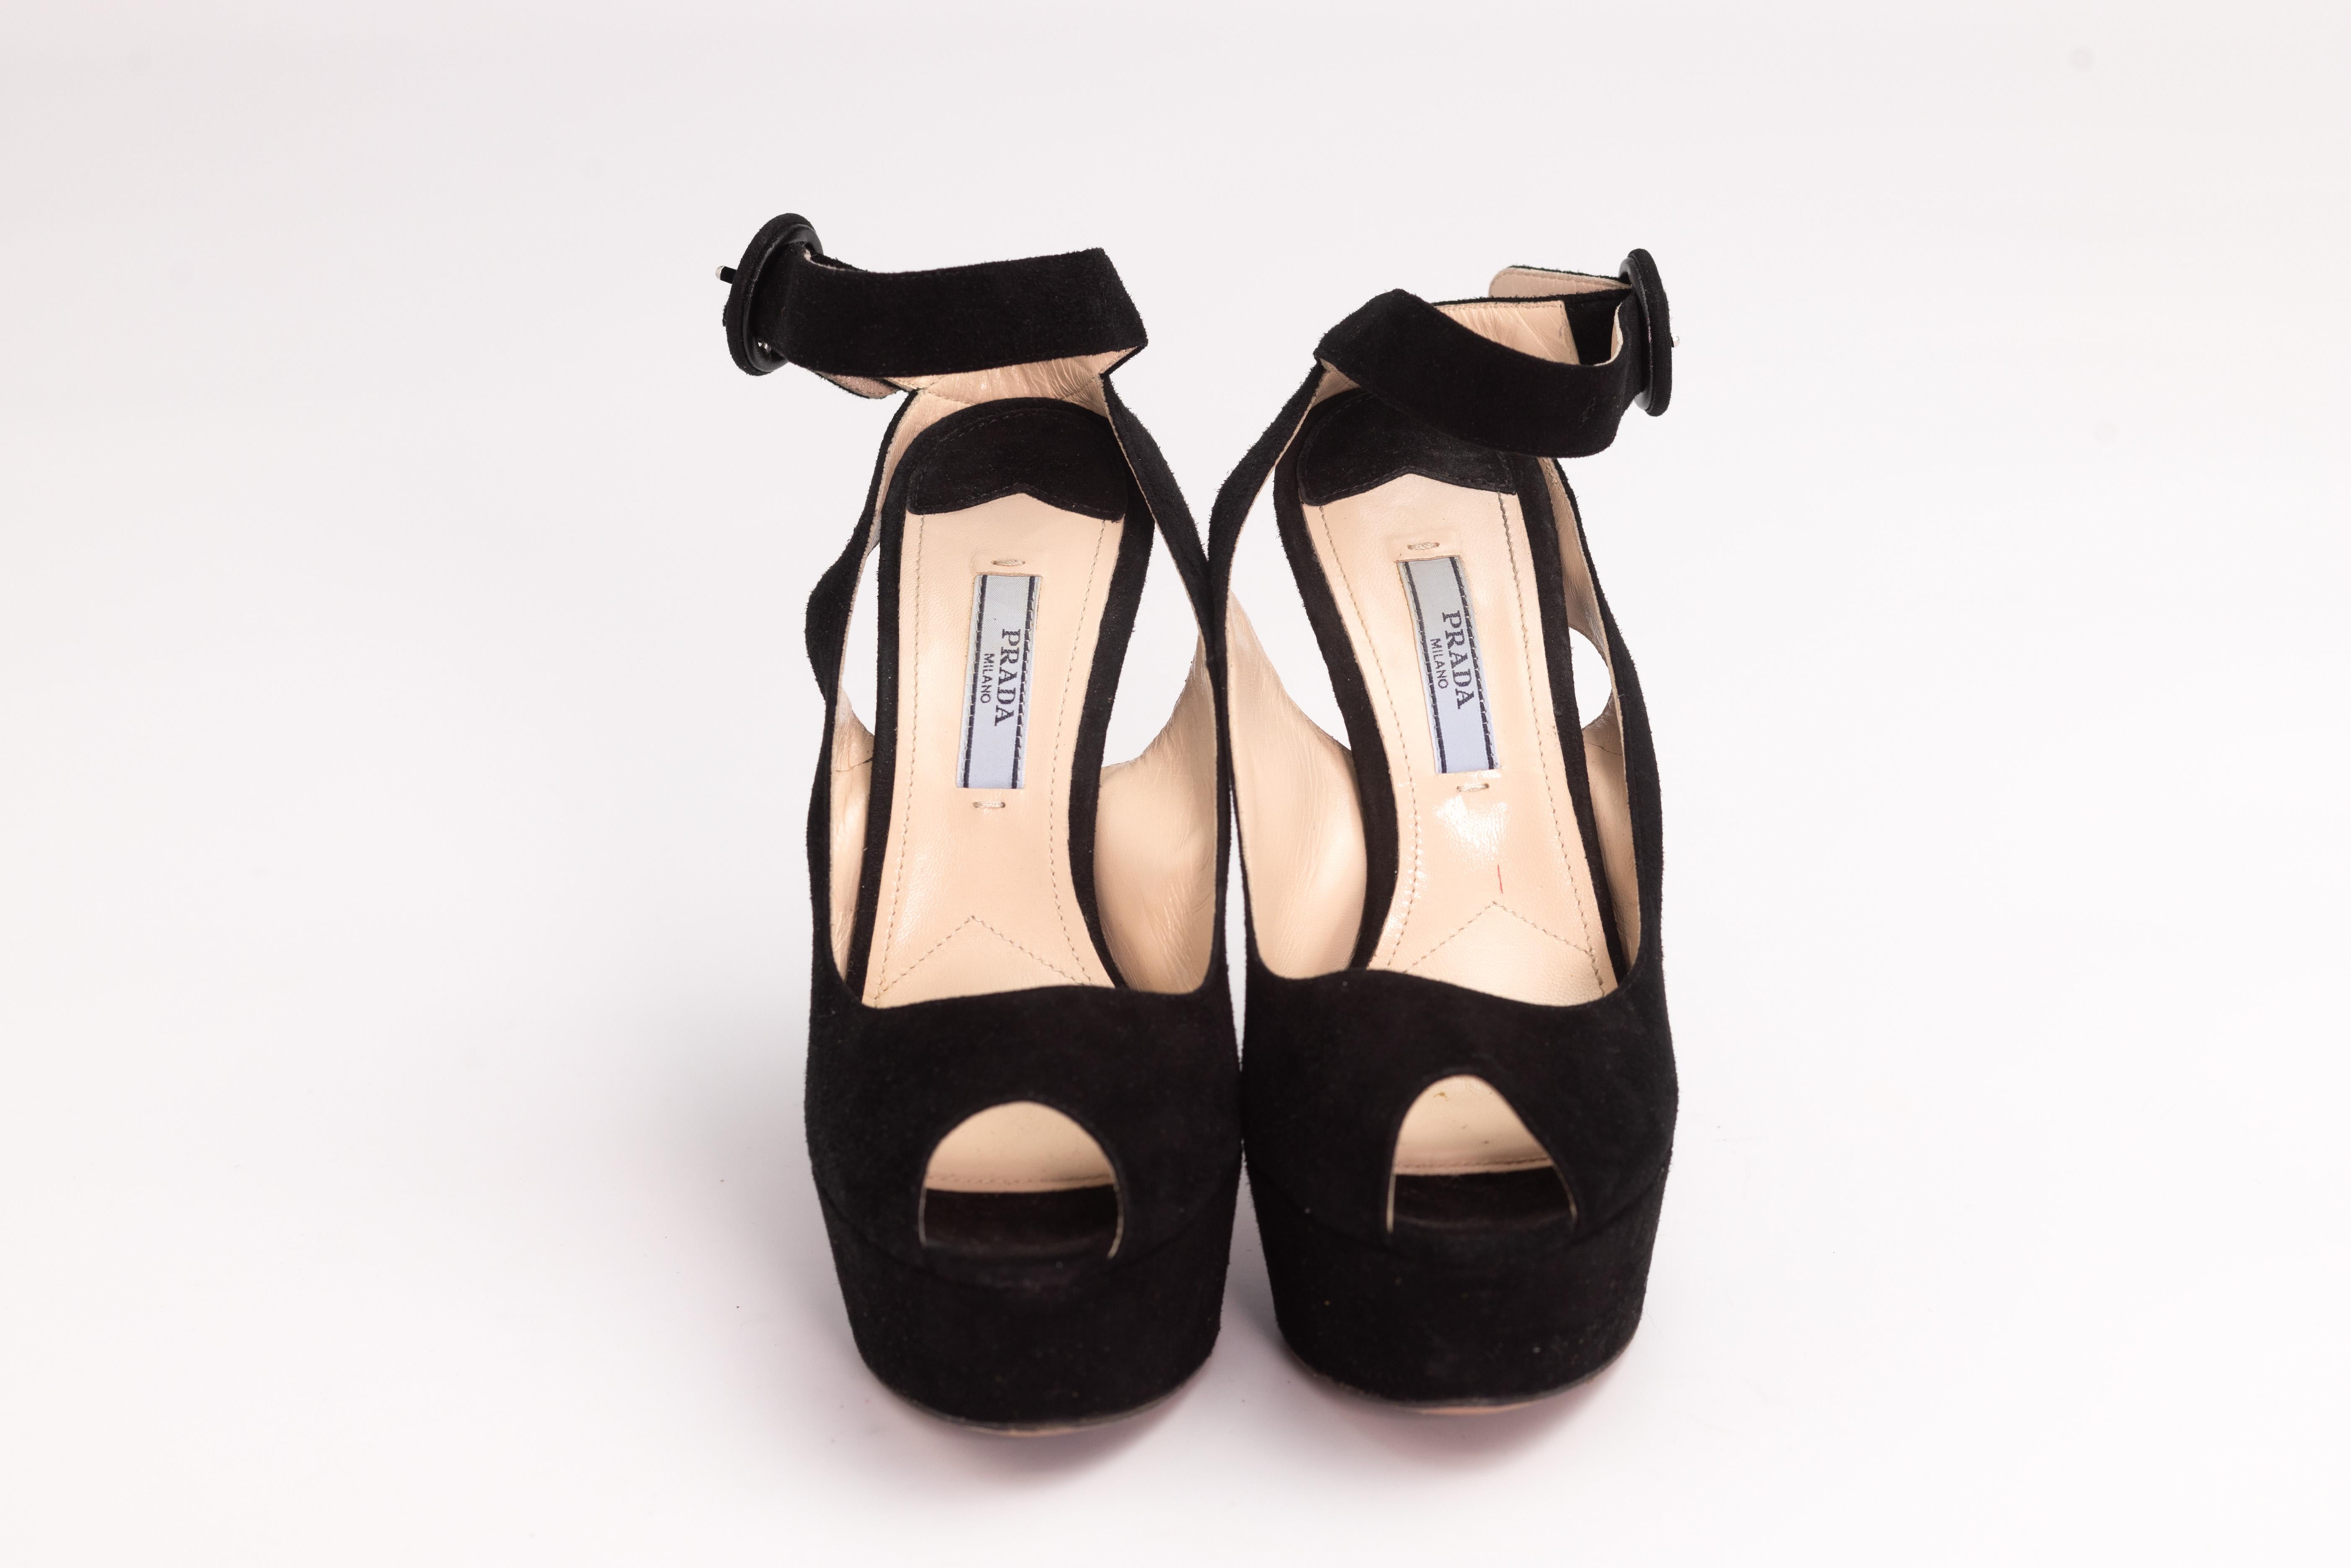 Women's Prada Pumps Black Suede Platform Ankle Strap Peep Toe Heels (EU 36) For Sale